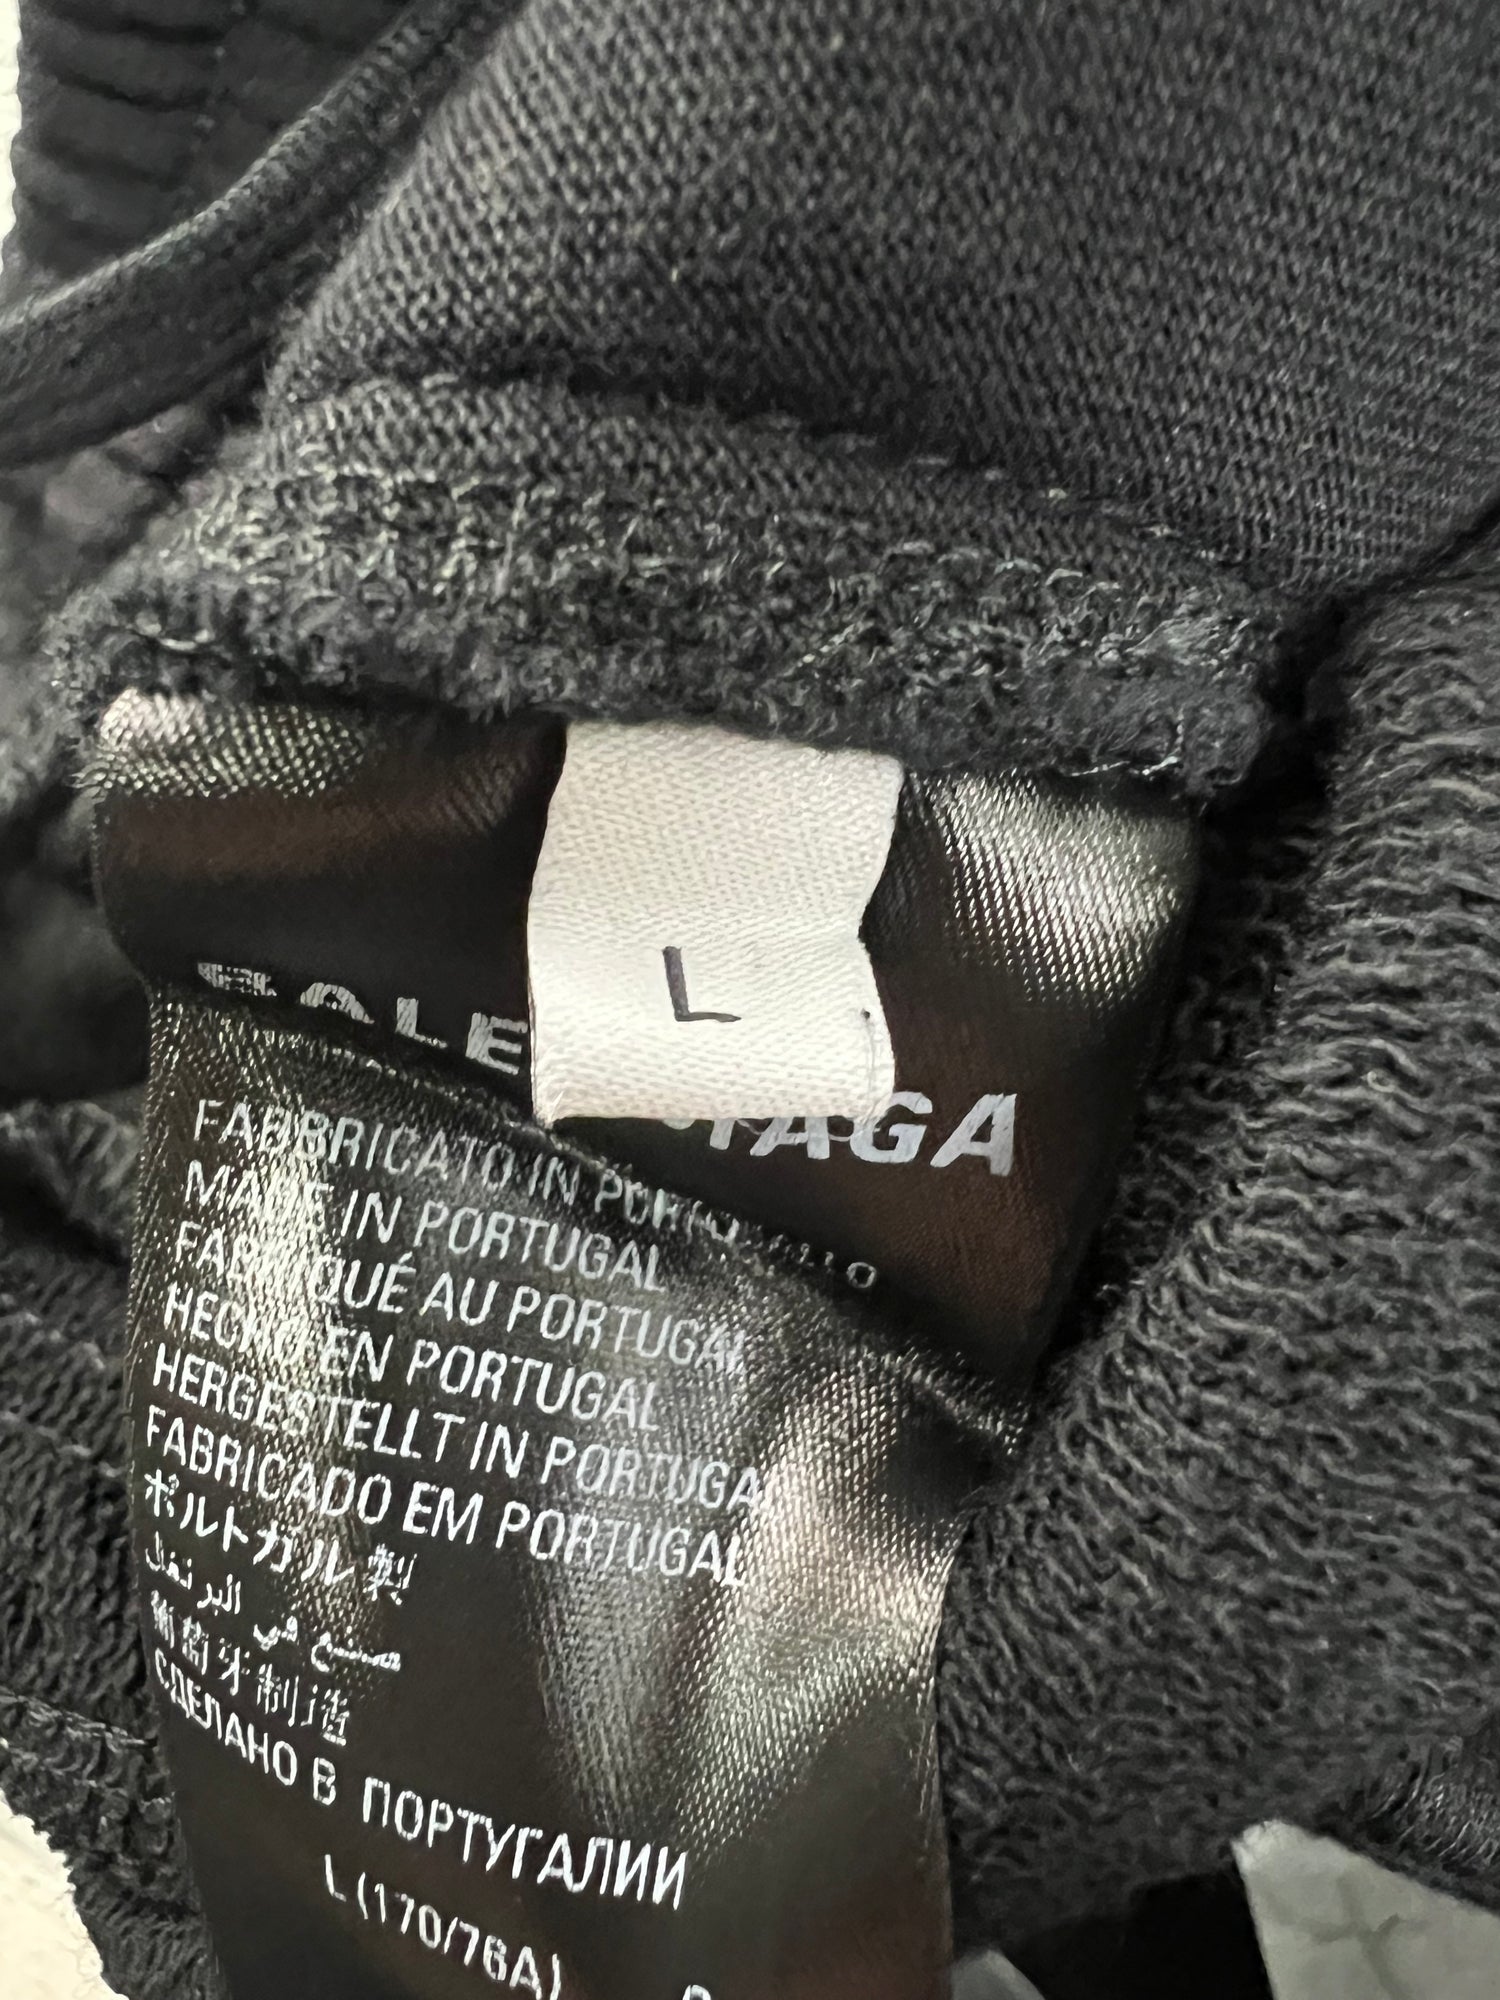 x Adidas Baggy fleece sweatpants in black - Balenciaga